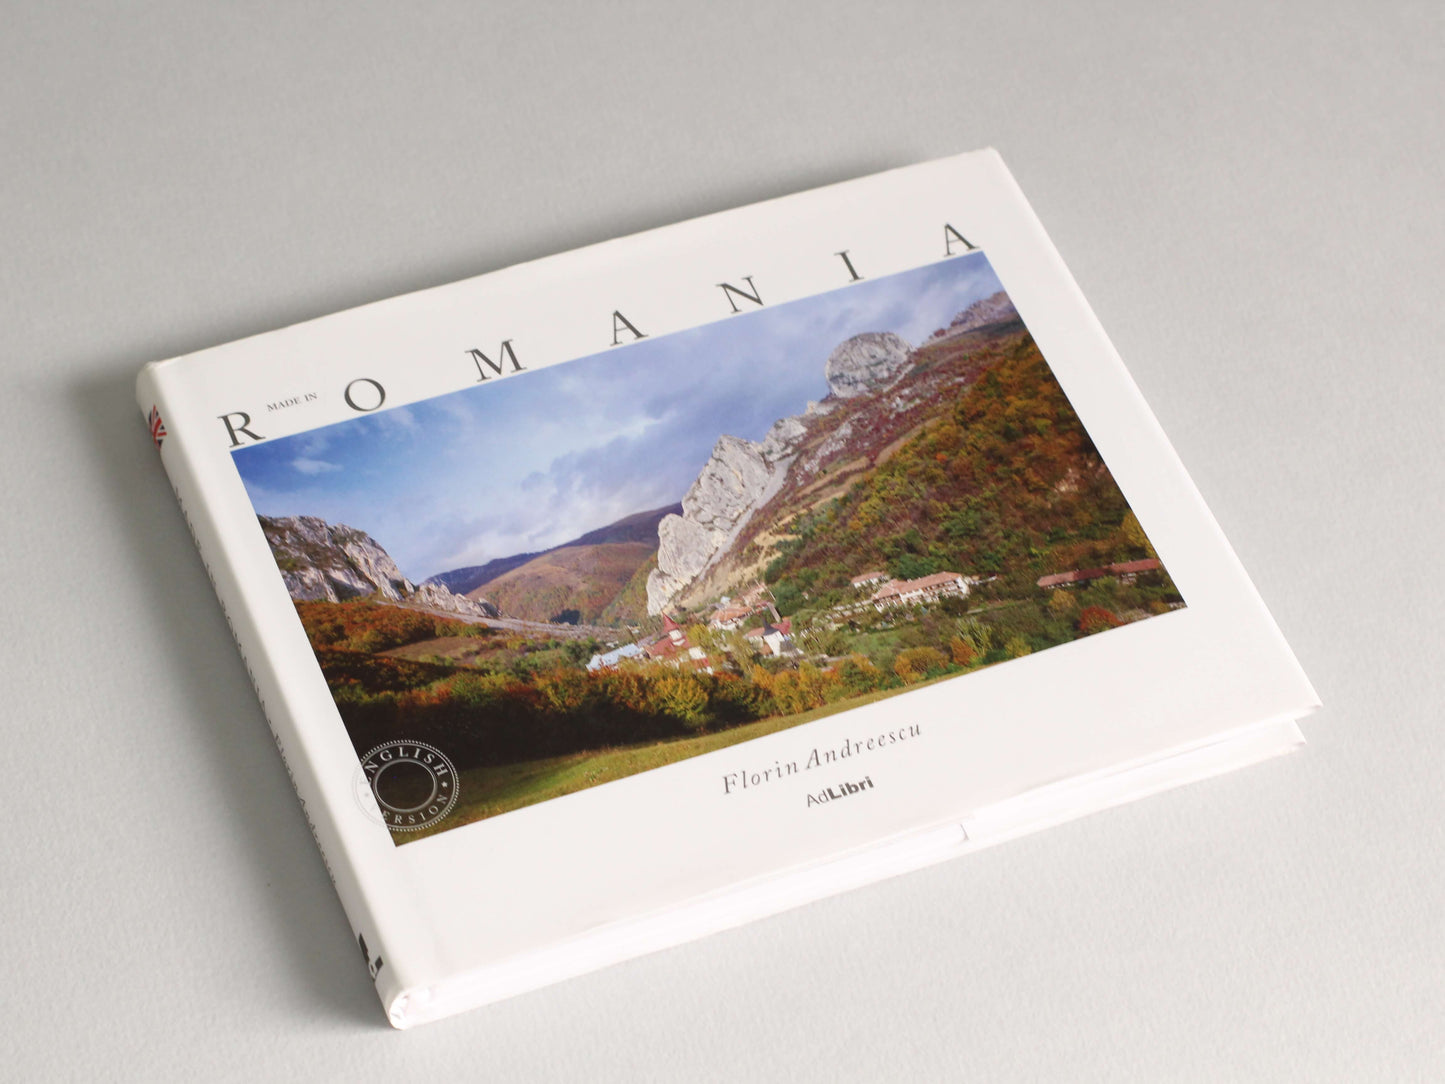 Album foto Made in Romania - Florin Andreescu